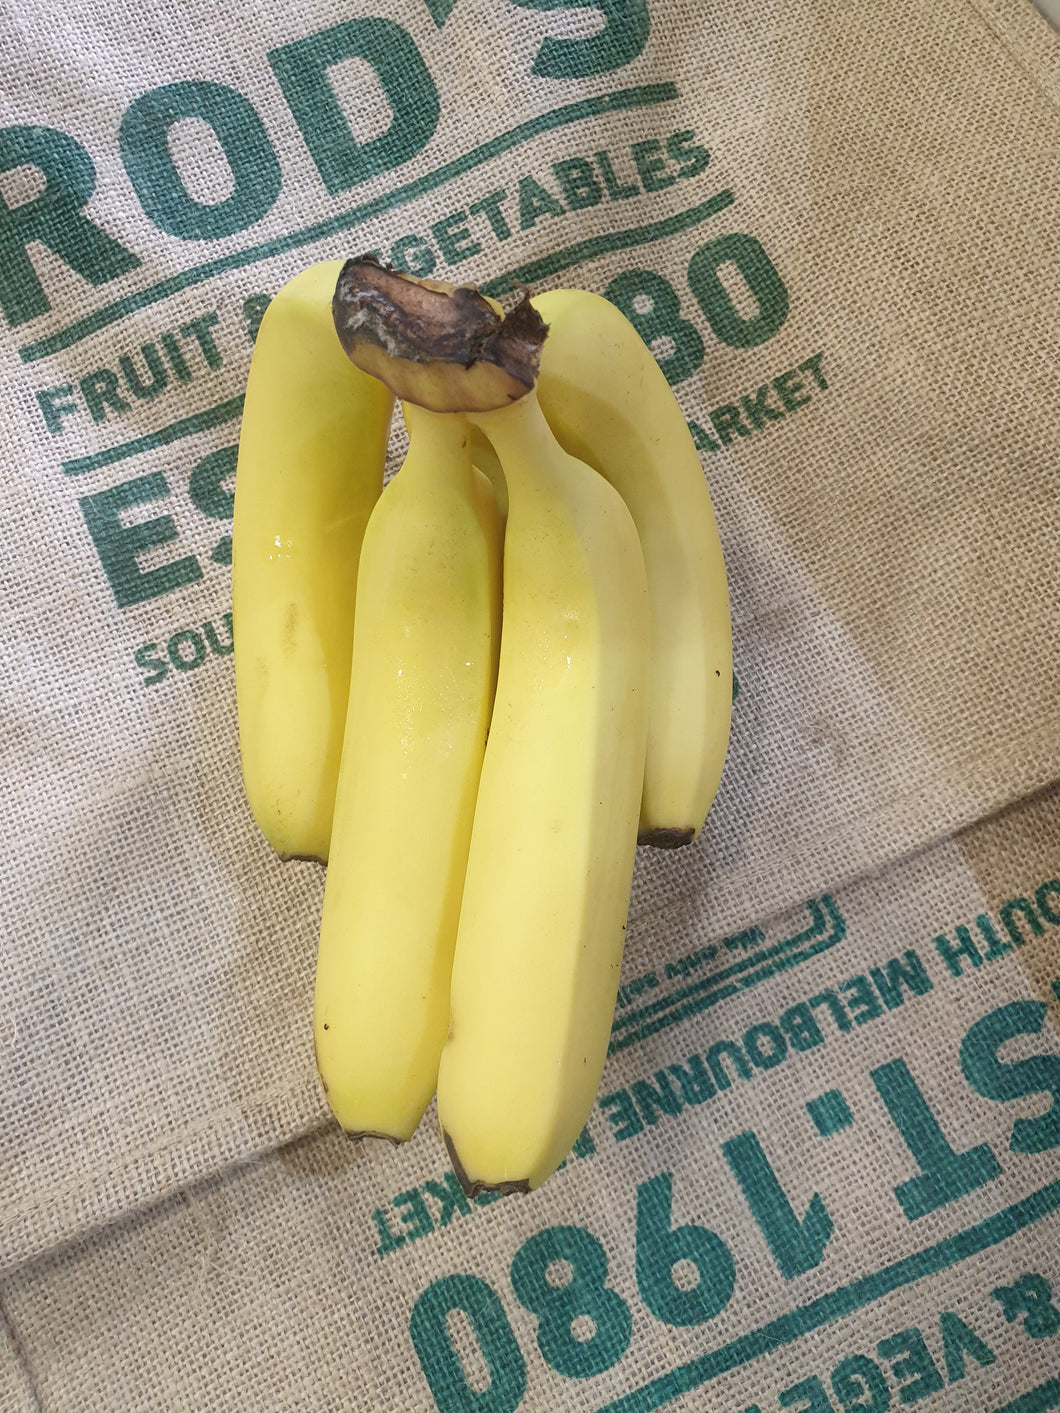 Bananas - 1kg